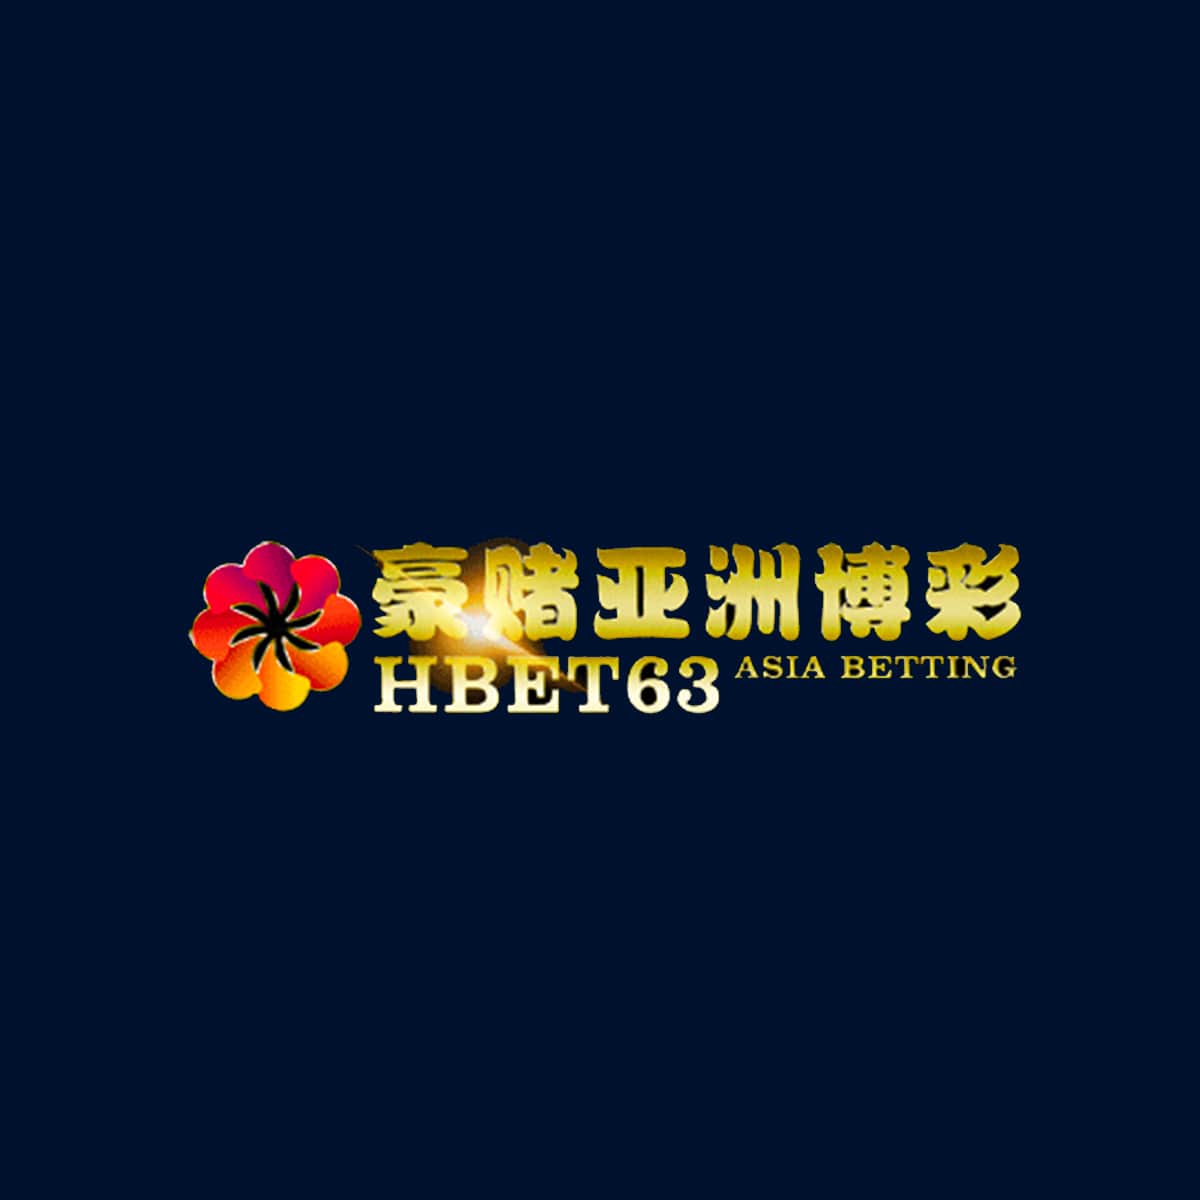 HBet63 Casino Logo